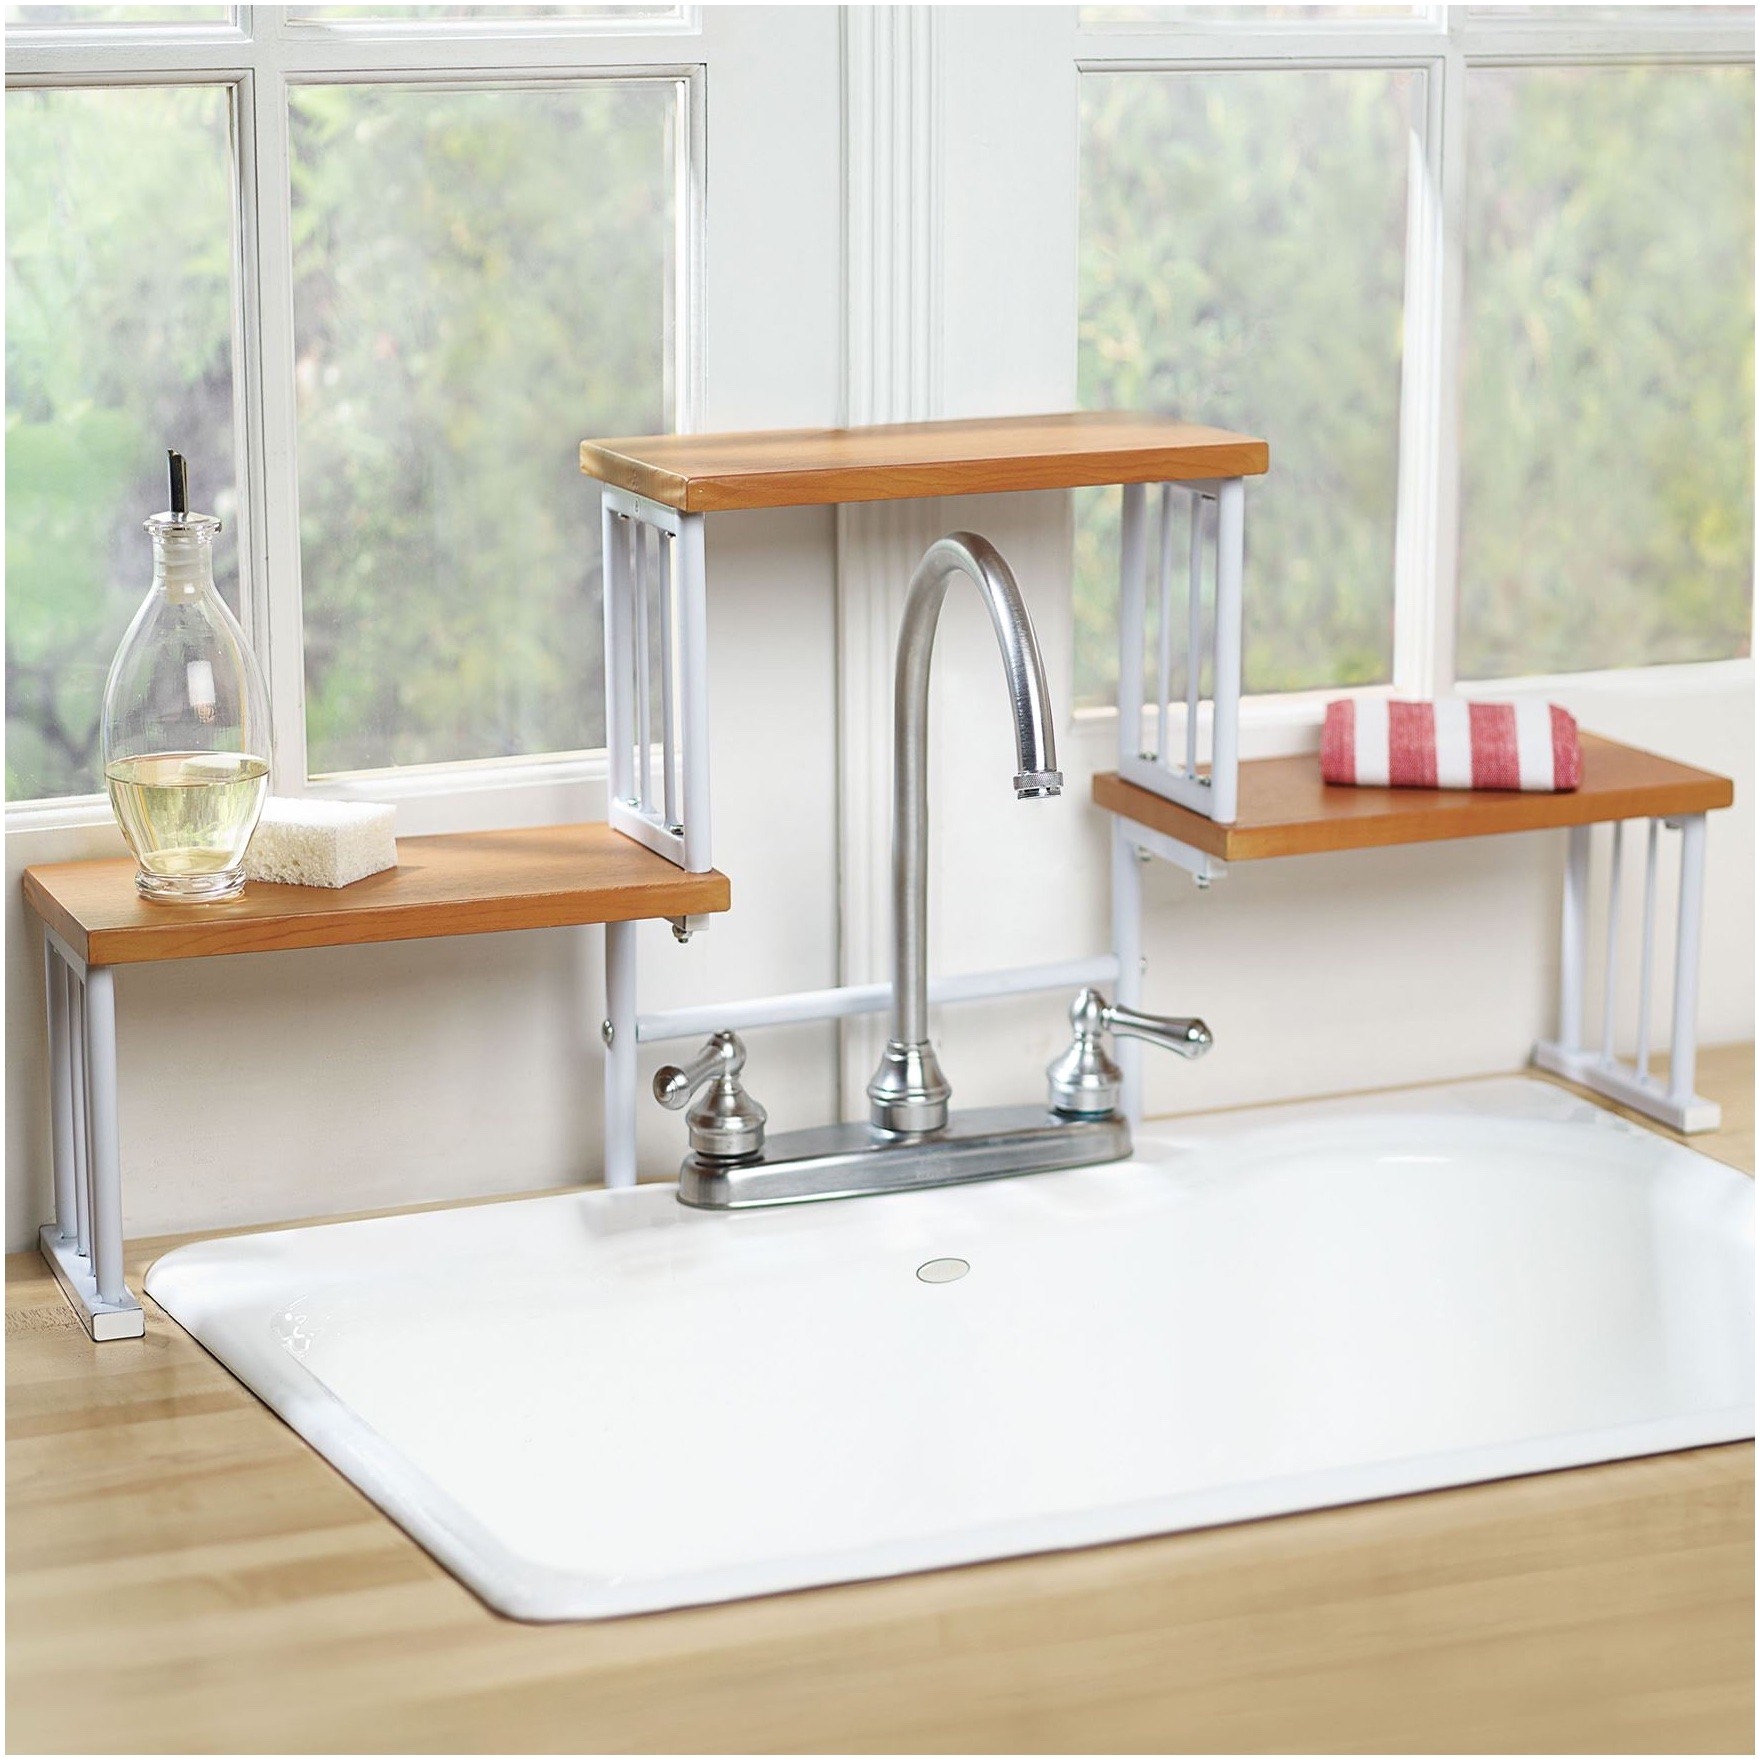 bathroom sink faucets tar inspirational kitchen sink racks design over the pasta strainer cutting board bath